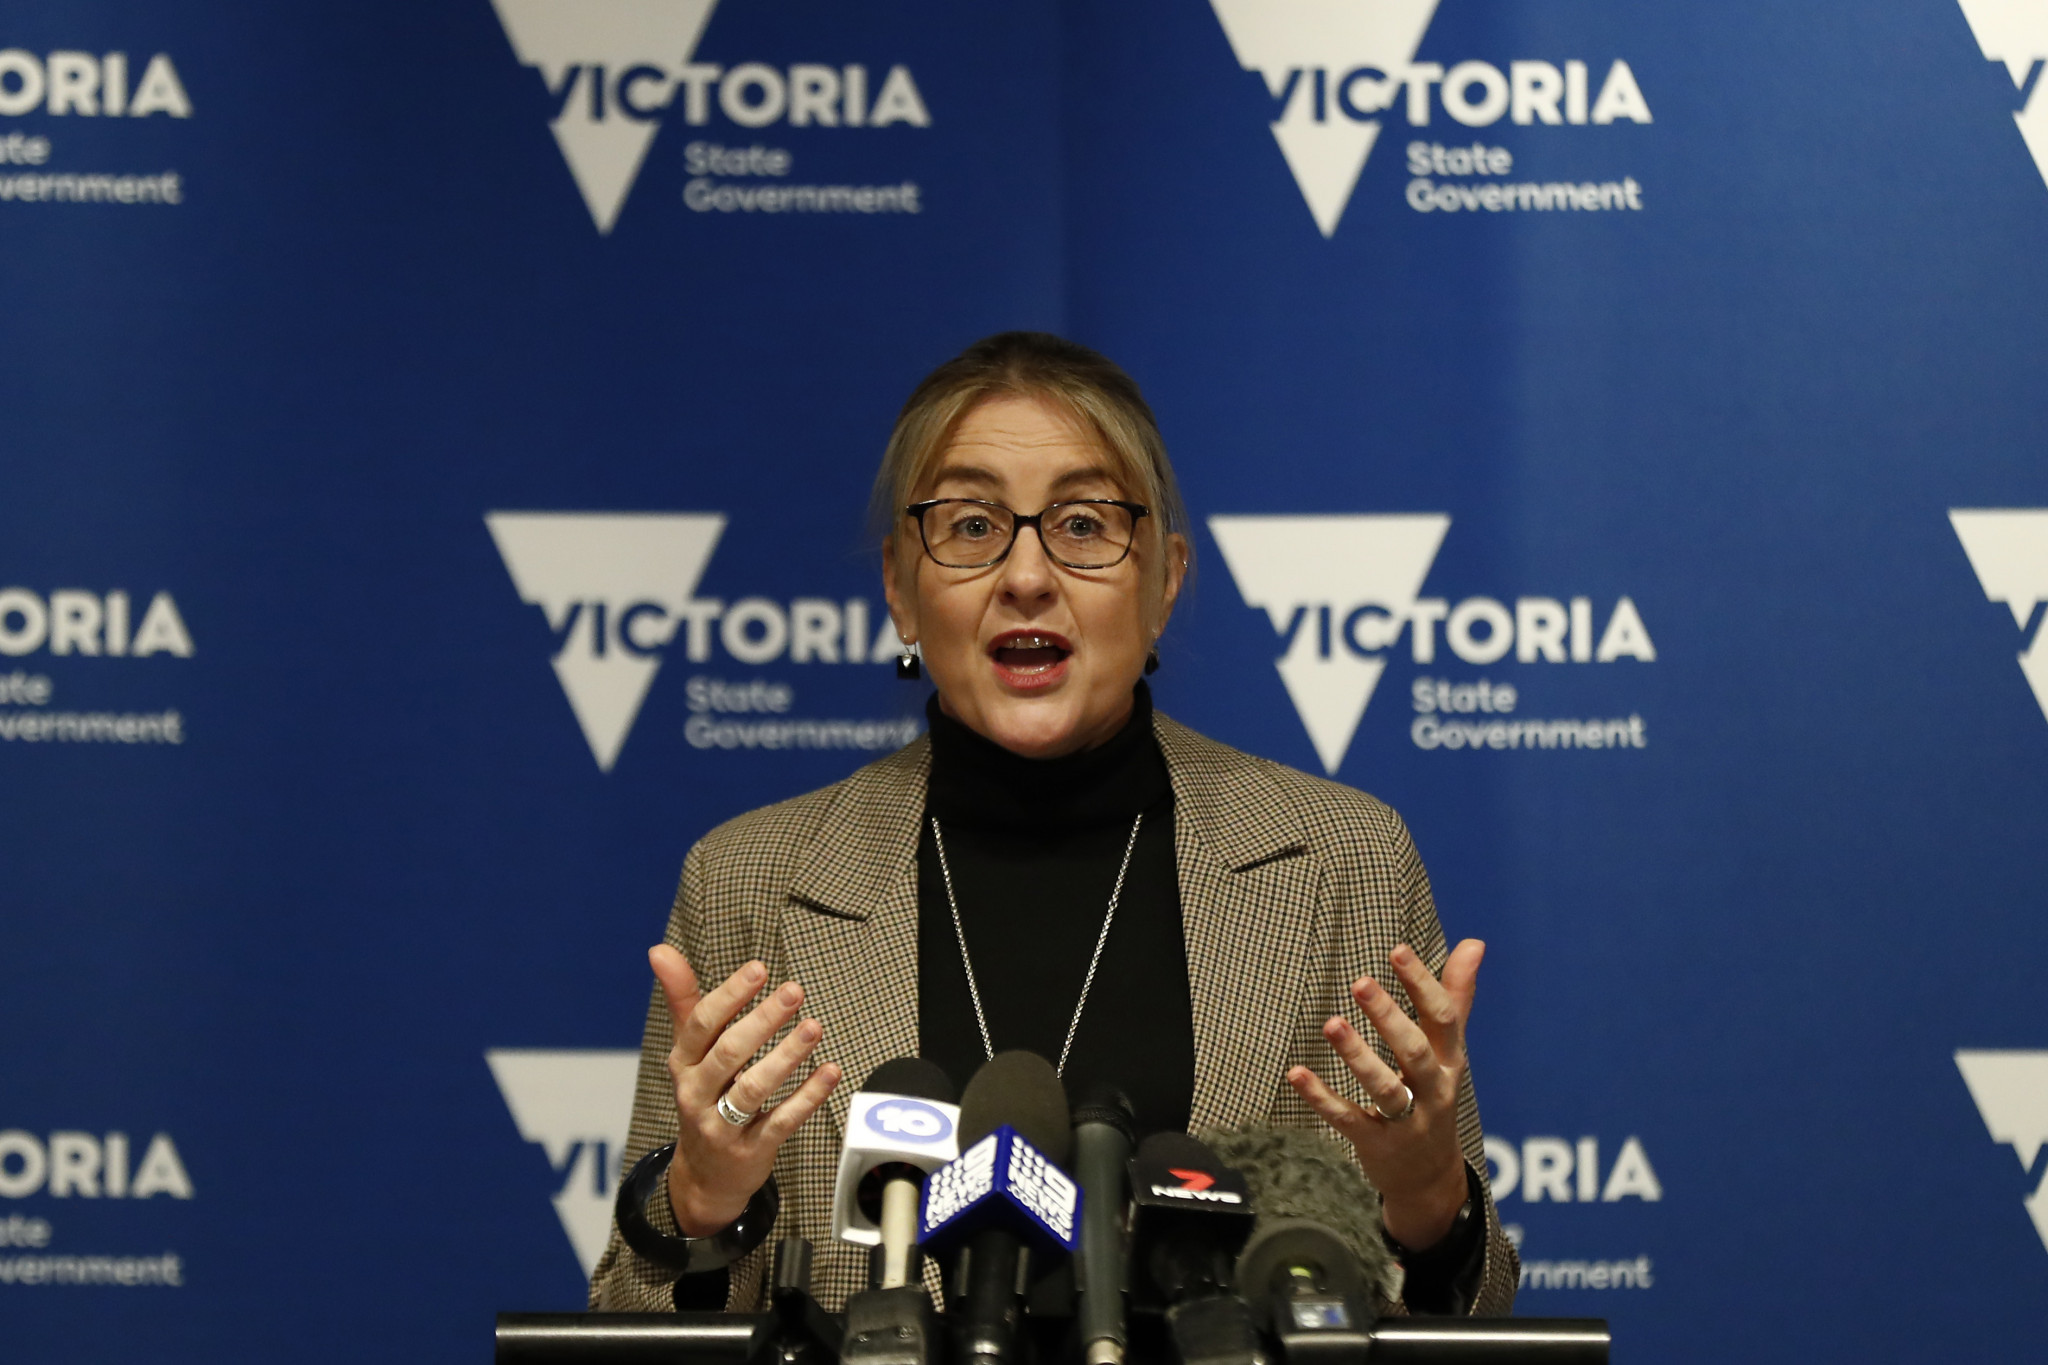 Victoria Deputy Premier Jacinta Allan has dismissed the inquiry as a 